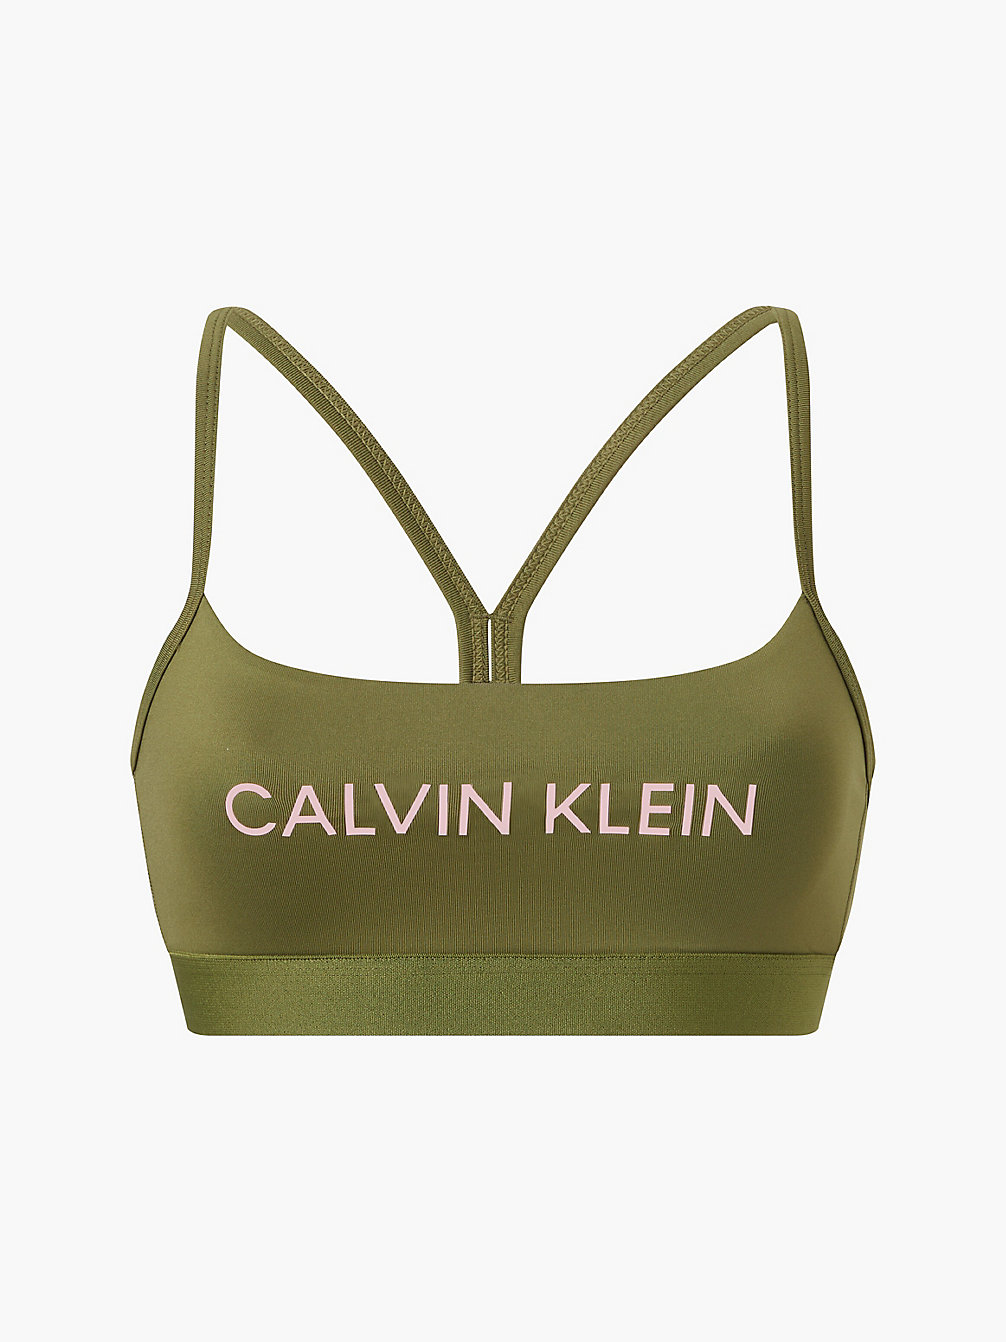 CAPULET OLIVE/ROSE QUARTZ Reggiseno Sportivo Basso Impatto undefined donna Calvin Klein